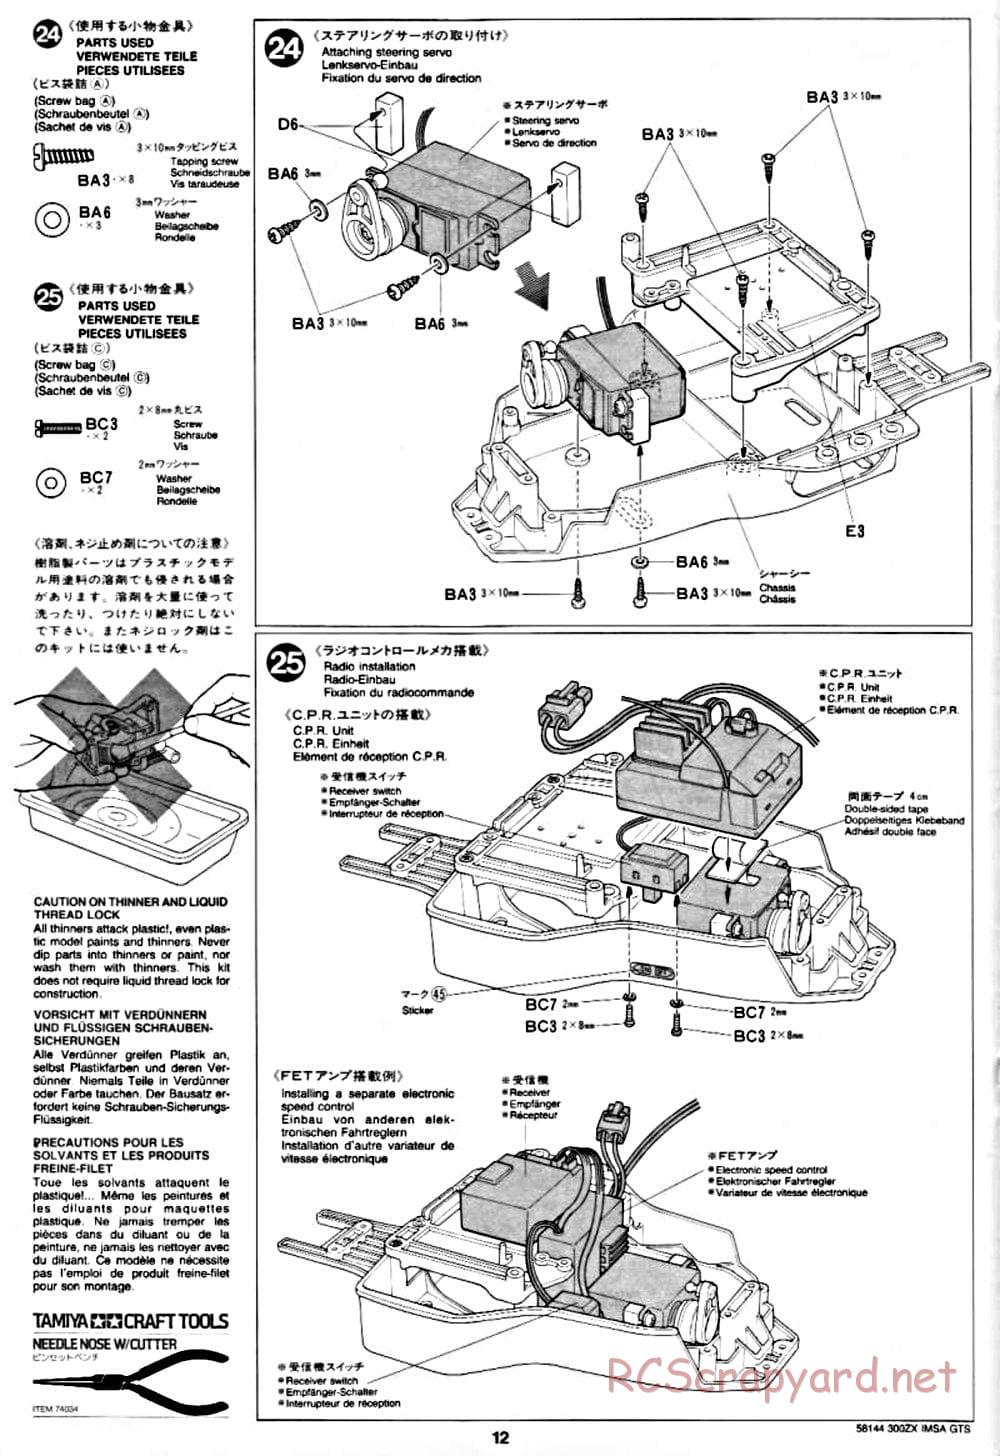 Tamiya - Nissan 300ZX IMSA-GTS - TA-02W Chassis - Manual - Page 12